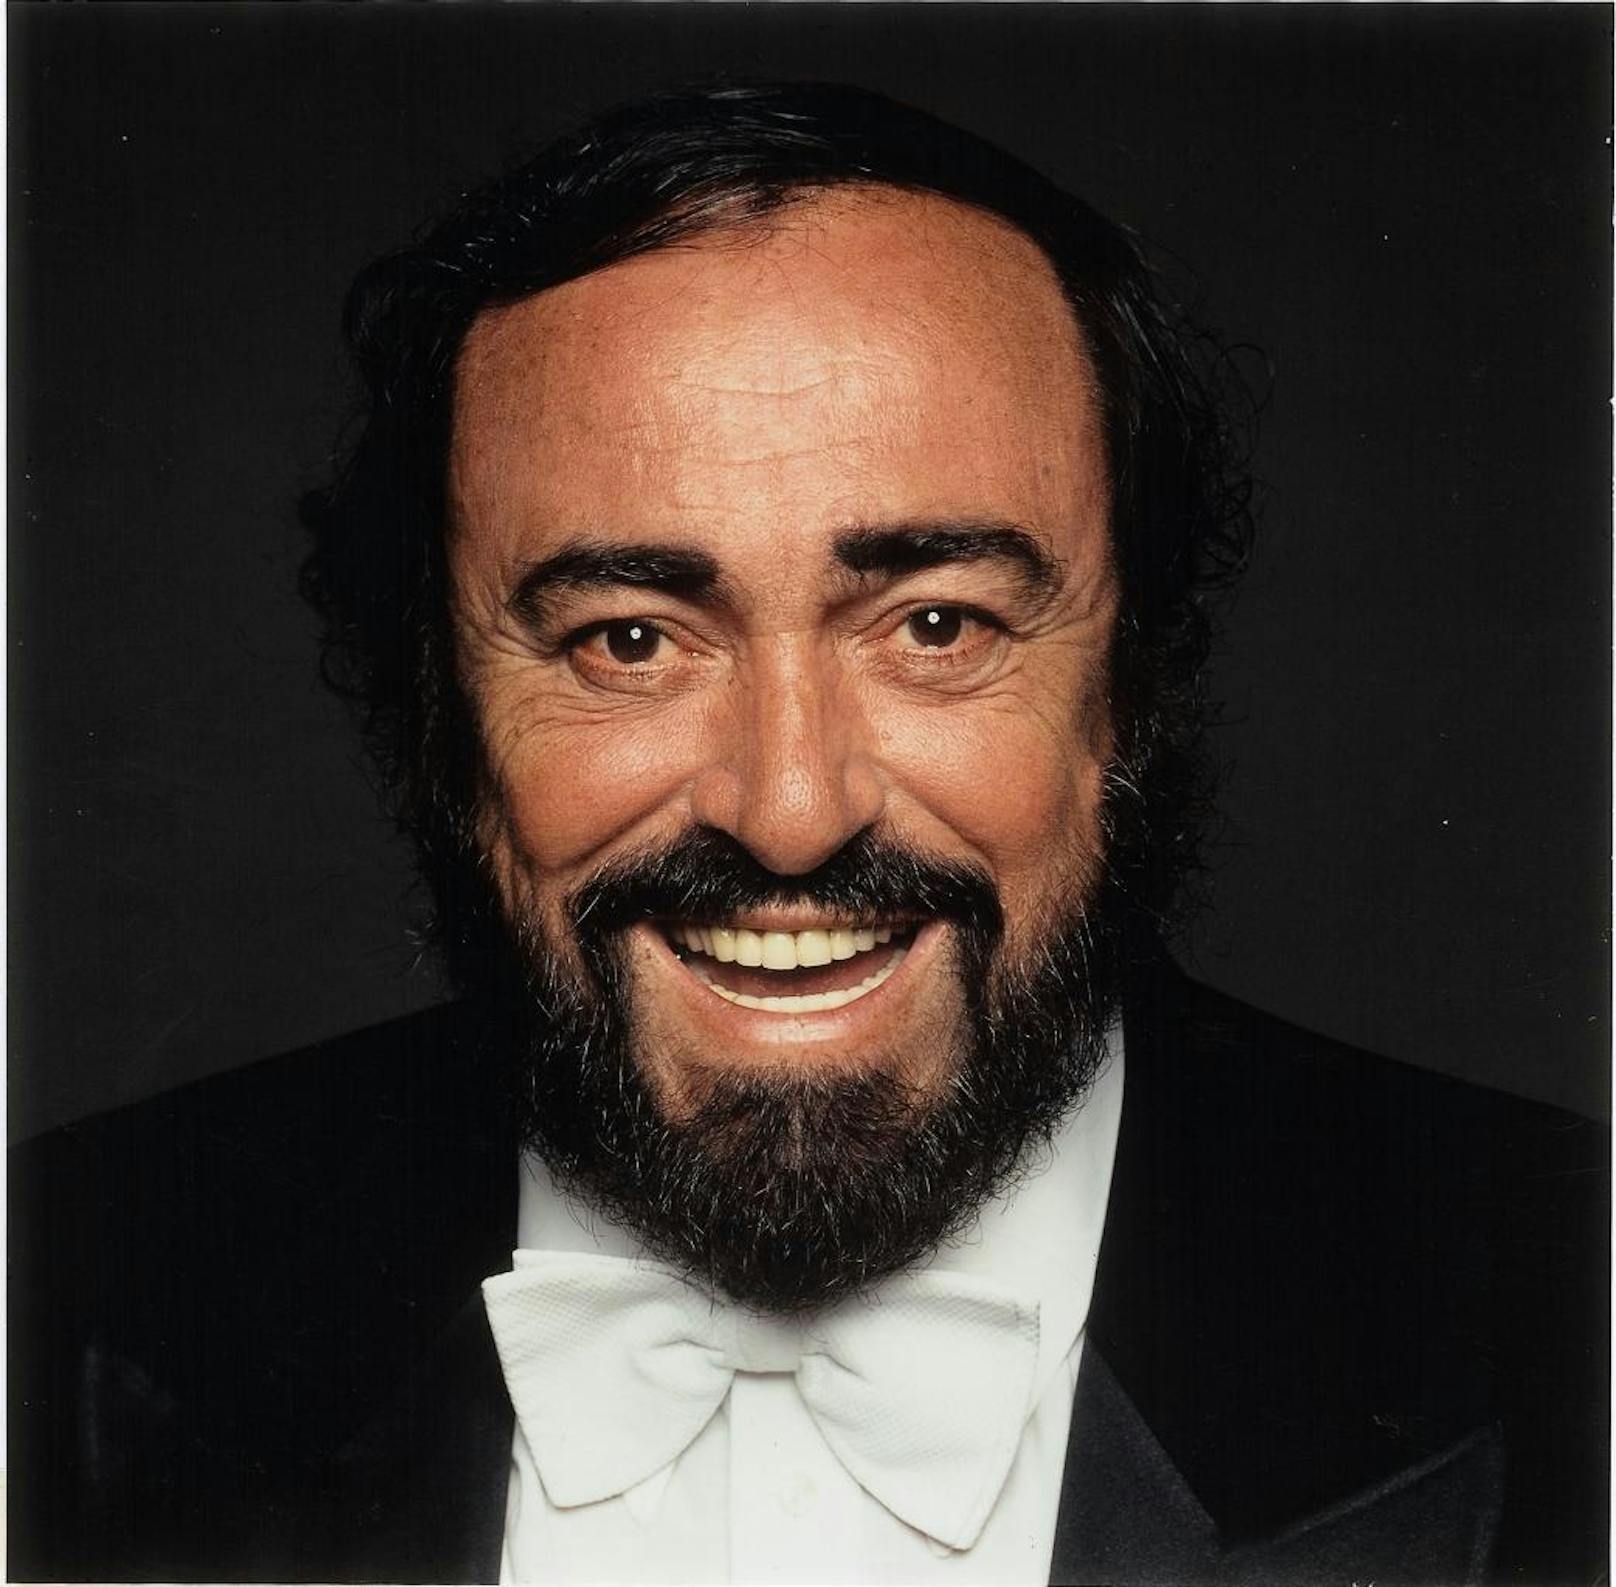 Szenenbild zum Film "Pavarotti" 